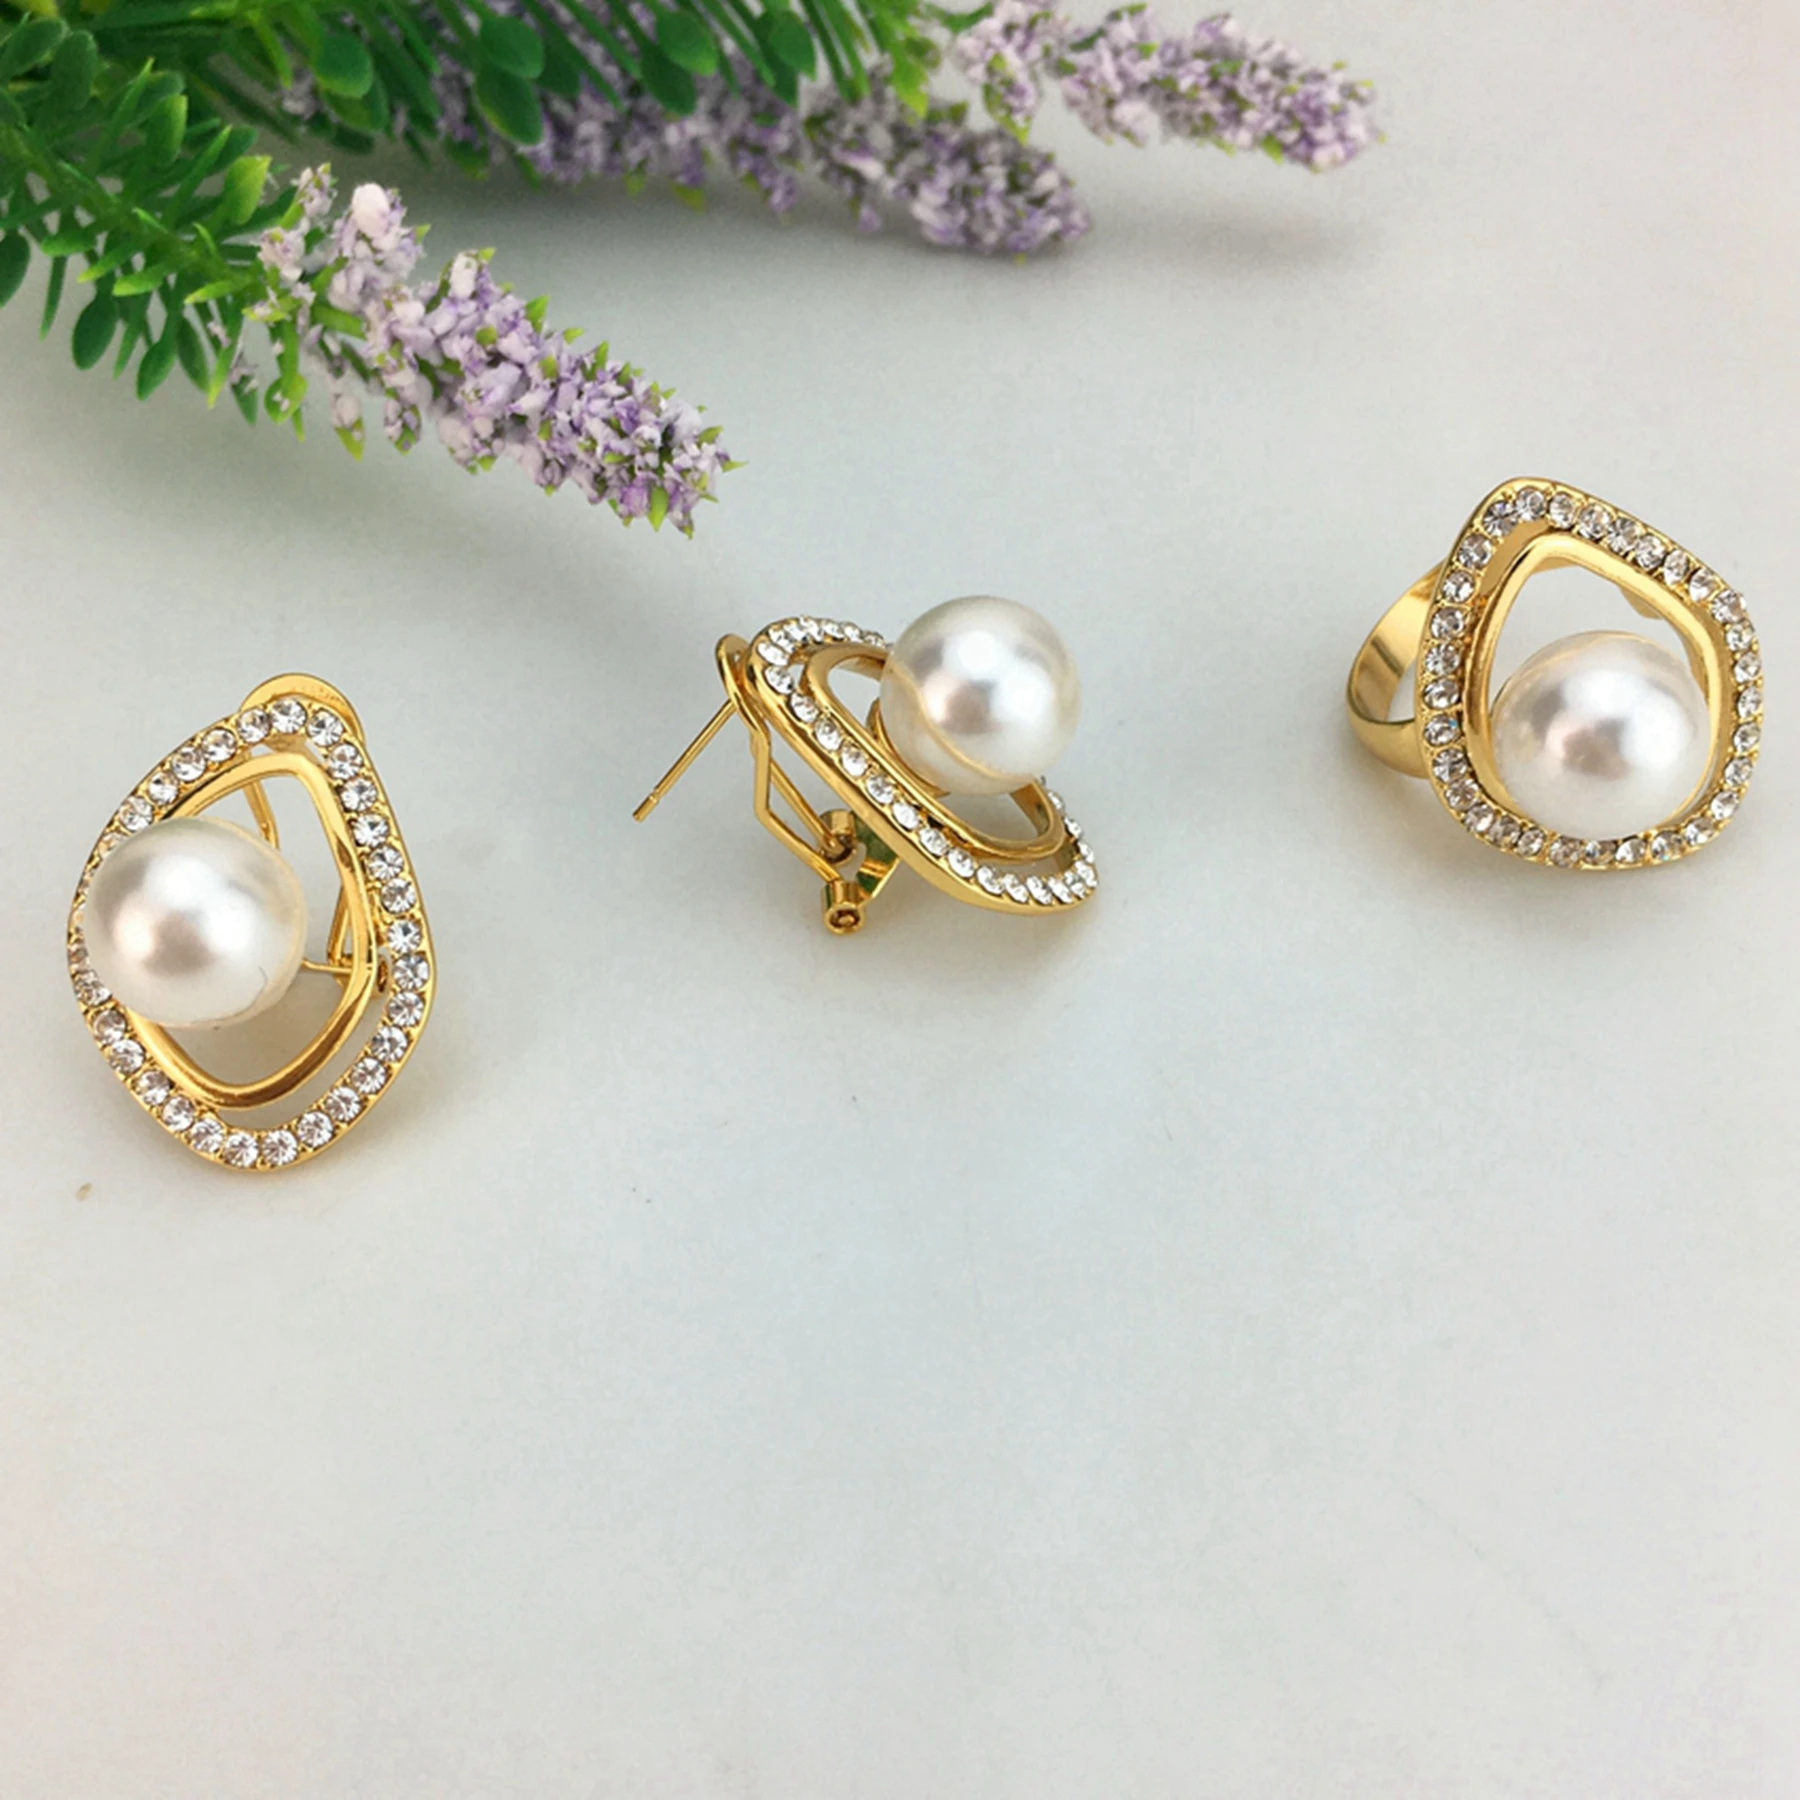 Yuminglai Goldplate Jewelry Pearl Jewelry Dubai Jewelry Sets For Women ...